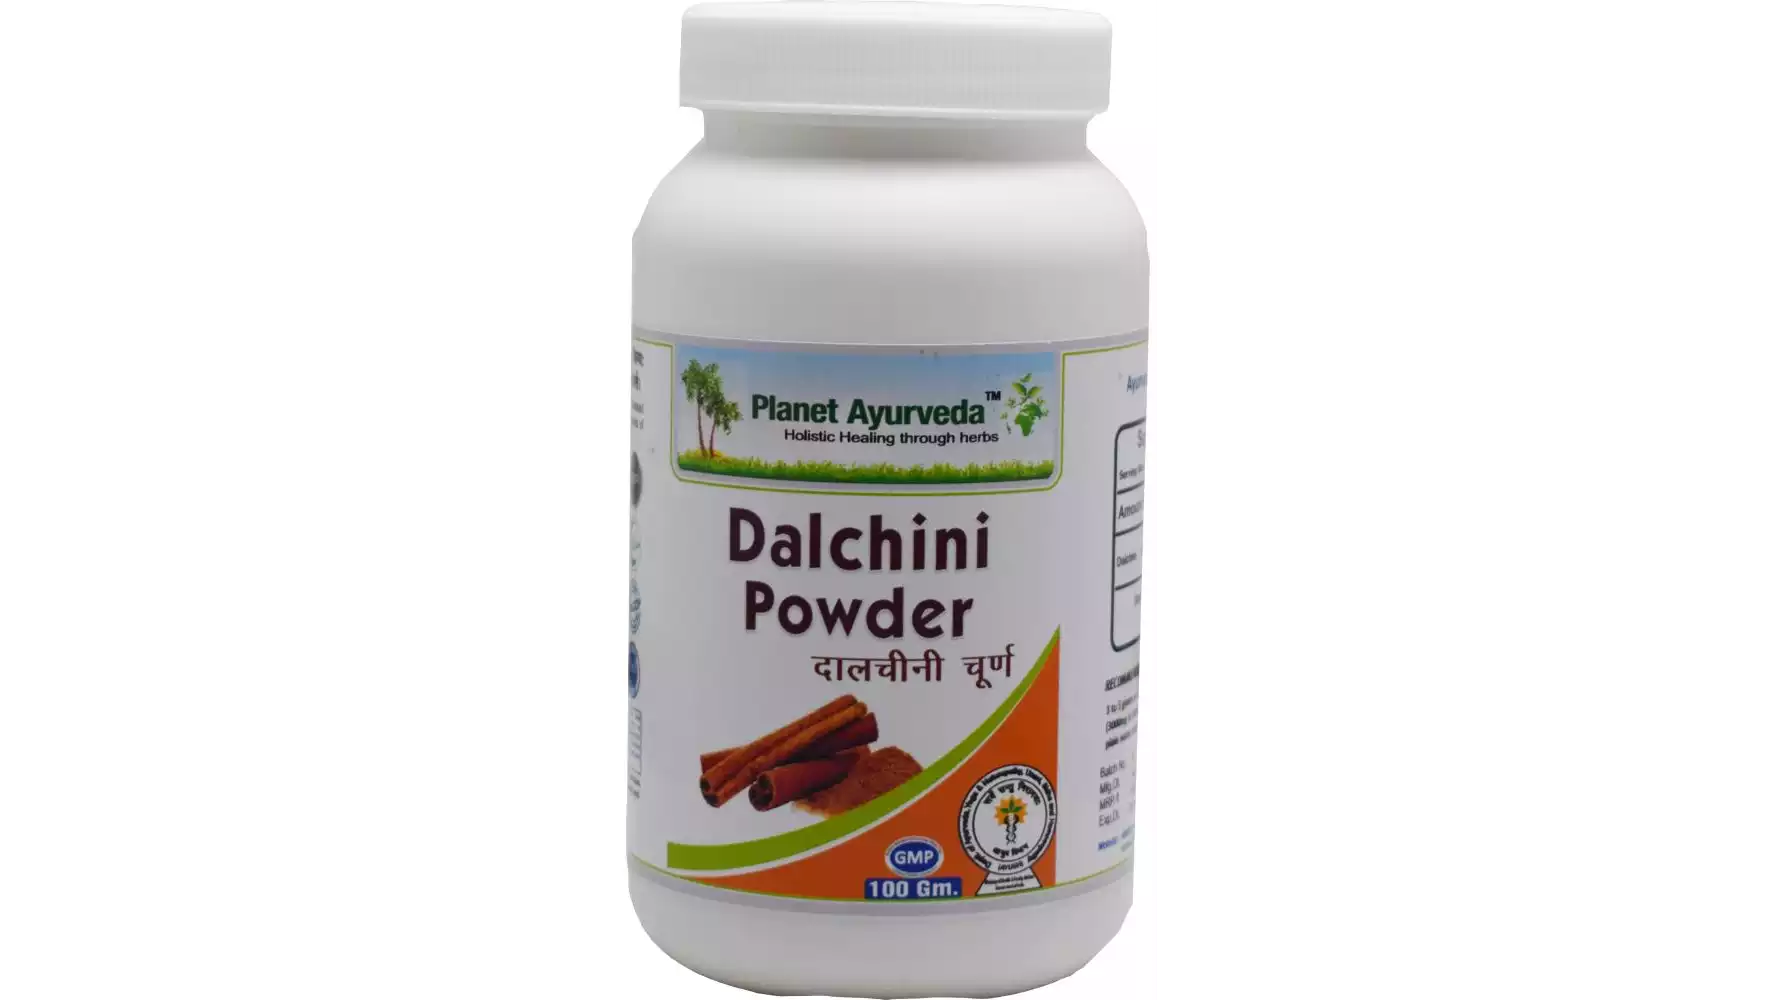 Planet Ayurveda Dalchini Powder (100g, Pack of 2)